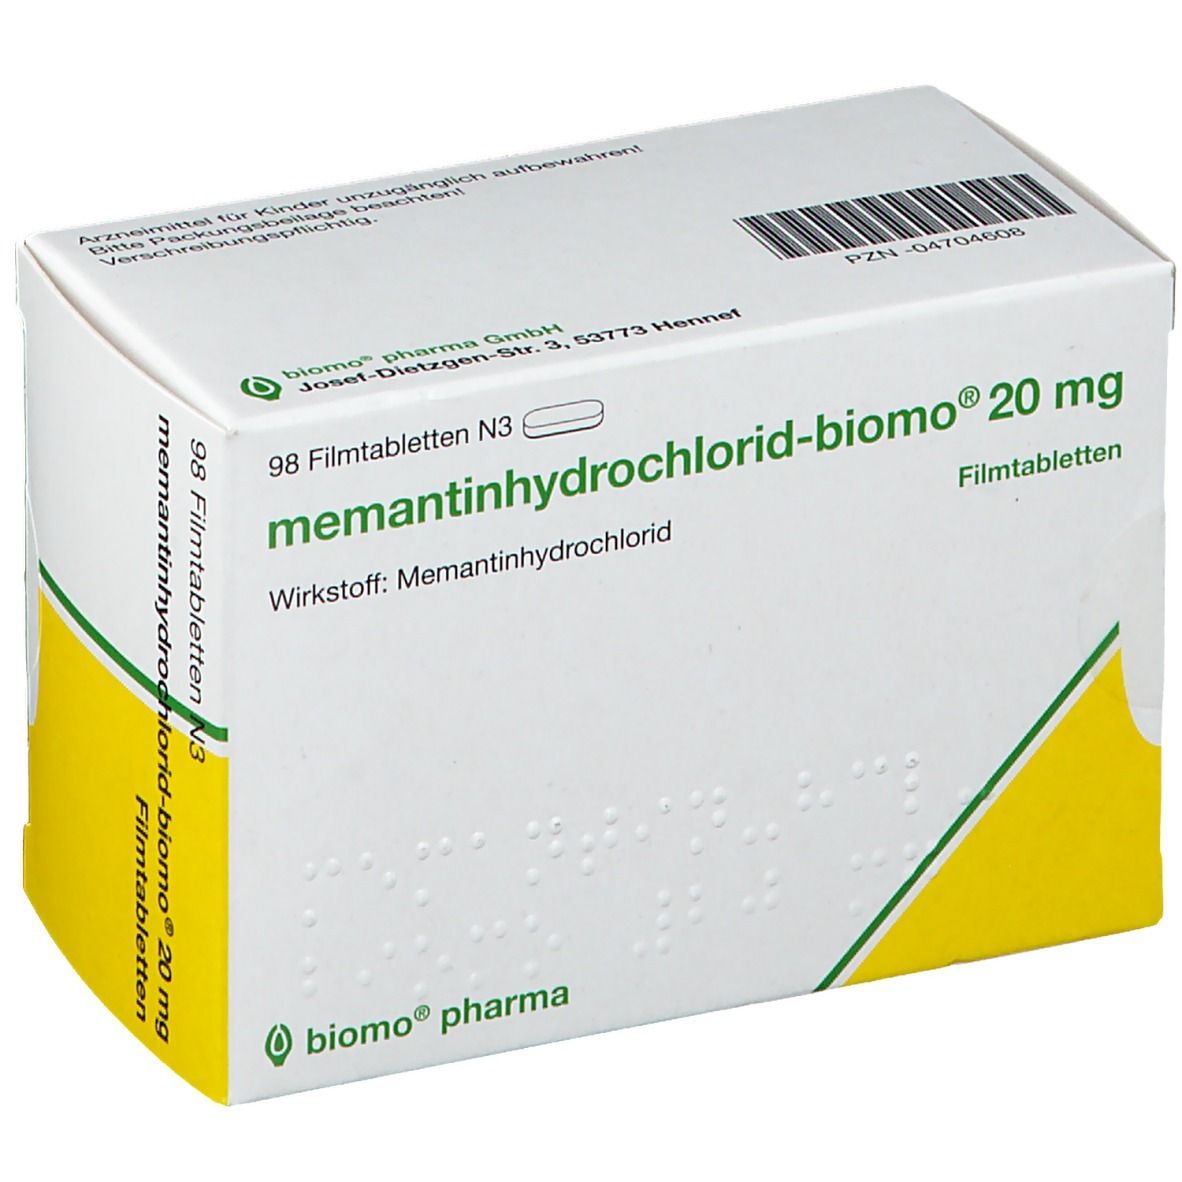 memantinhydrochlorid-biomo® 20 mg